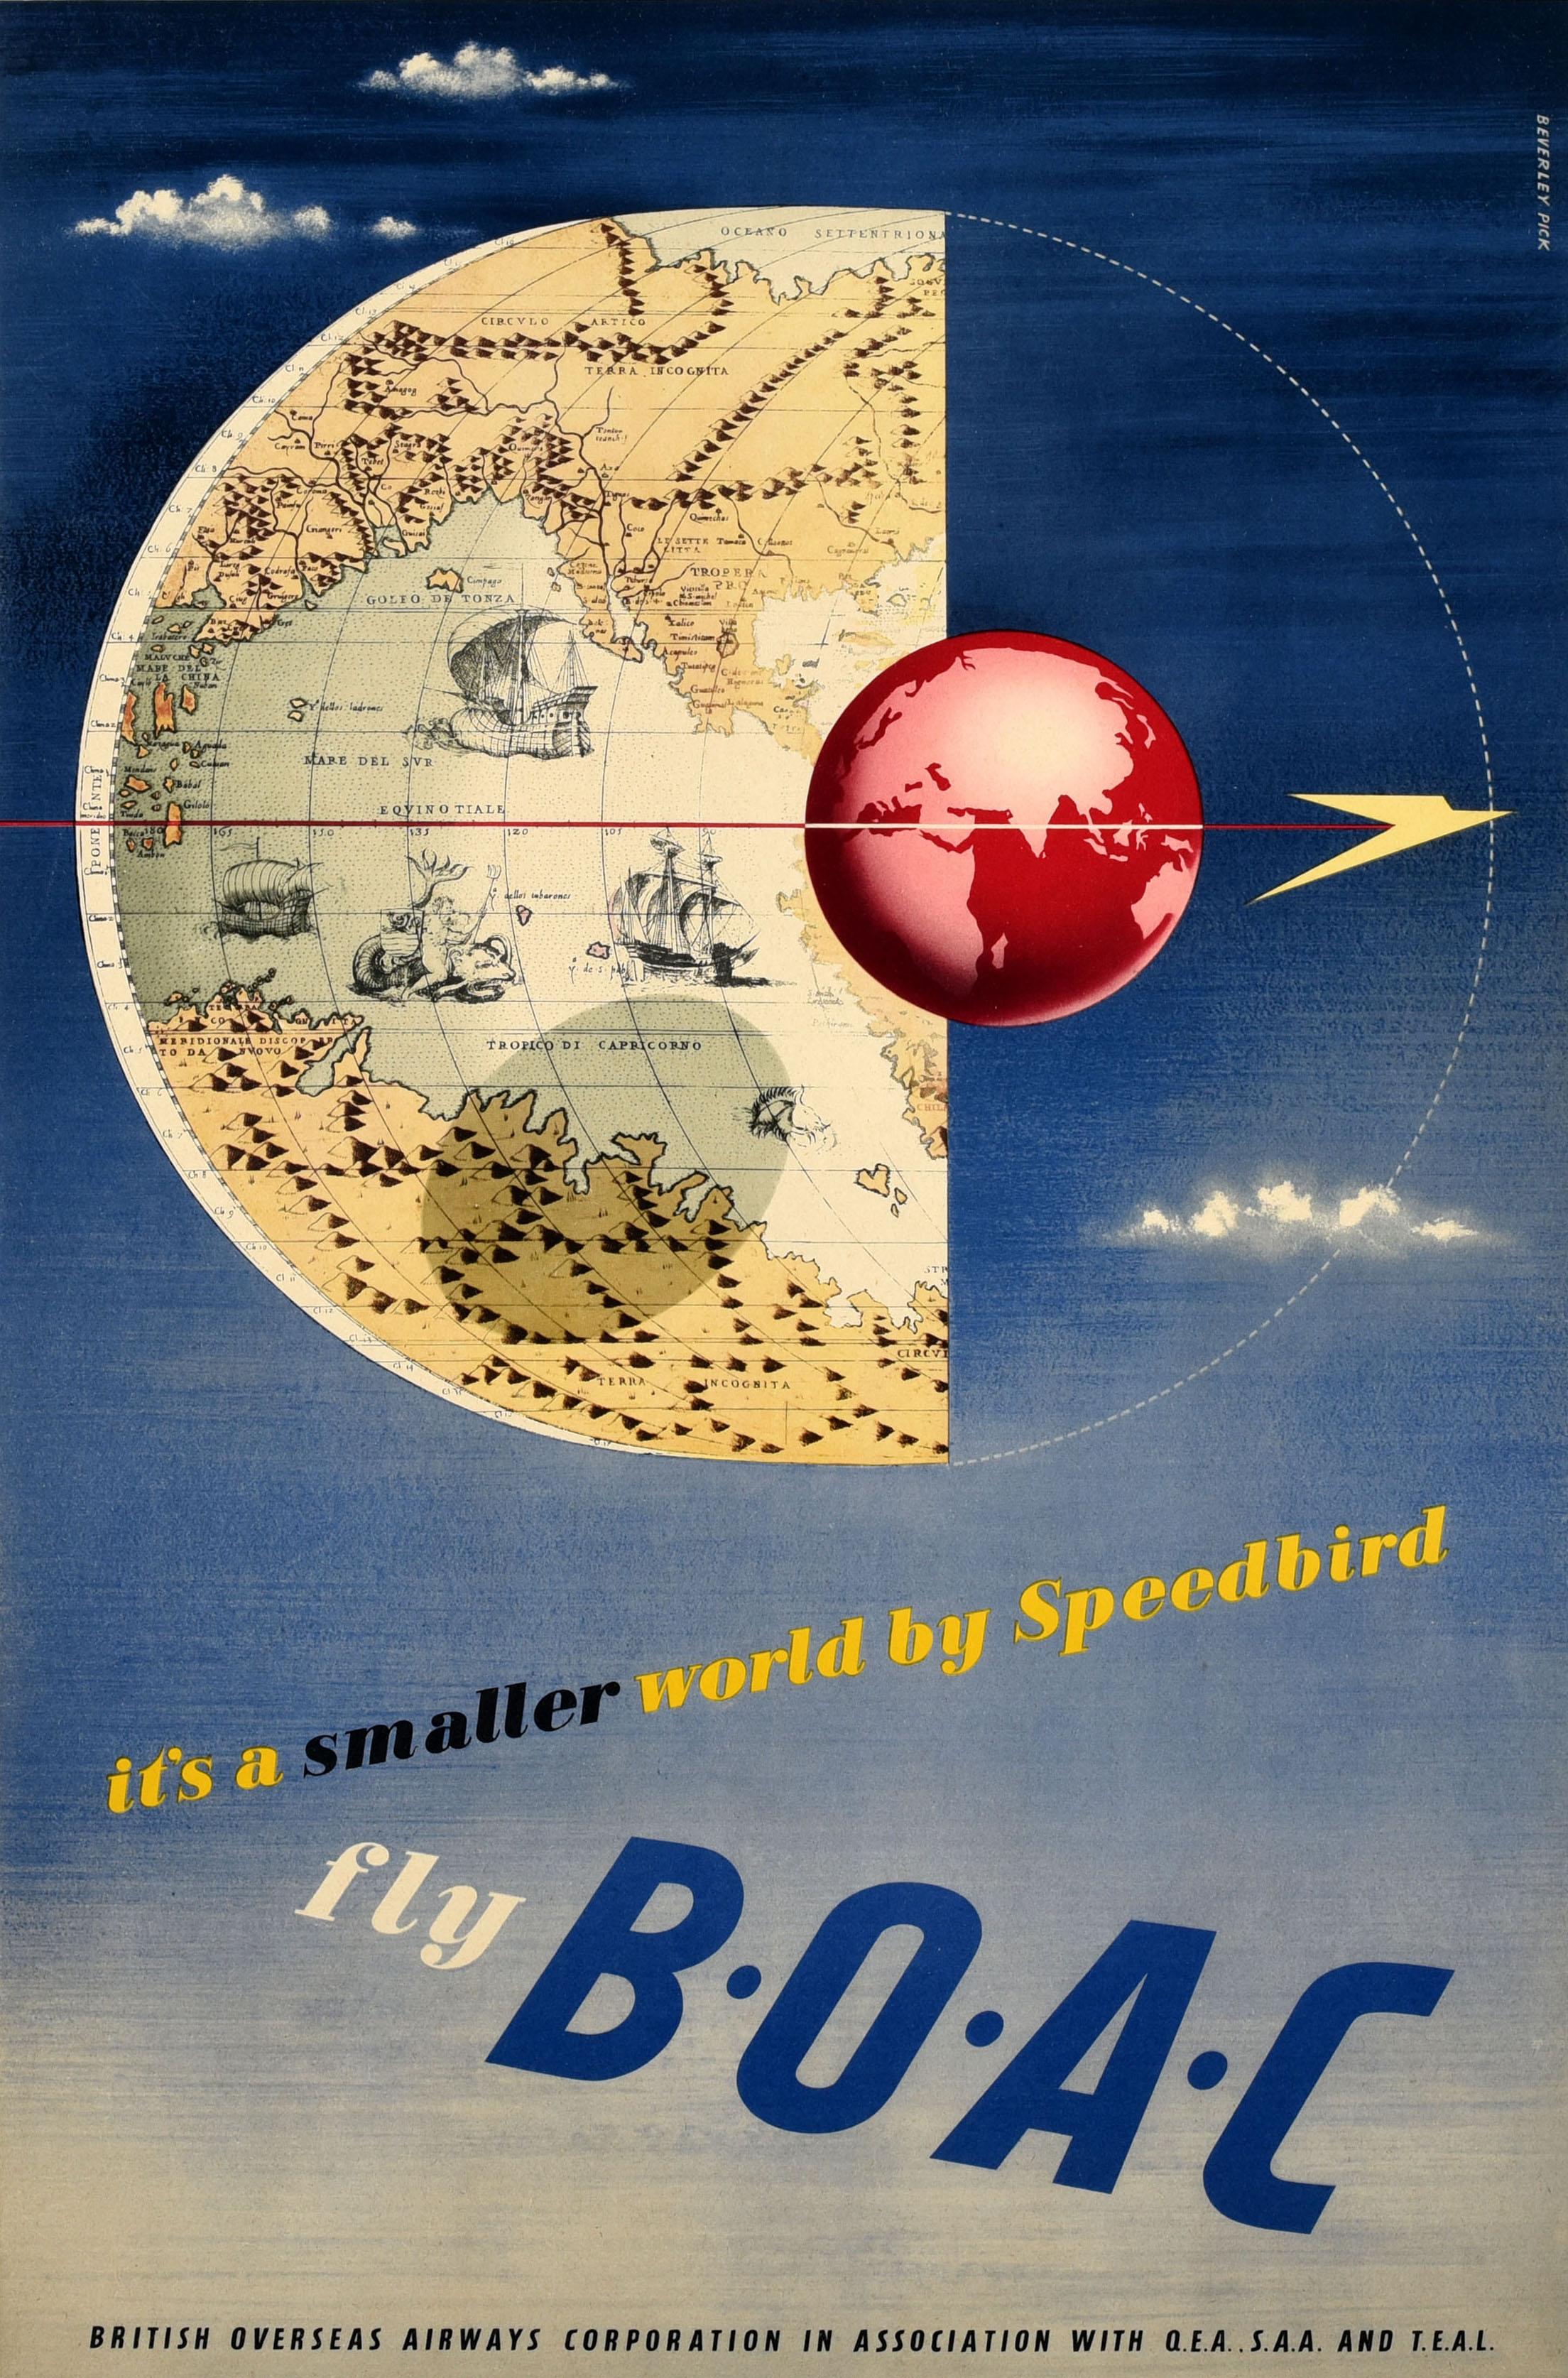 Original Vintage Travel Advertising Poster BOAC Smaller World By Speedbird 1950s - Print by Beverley Pick